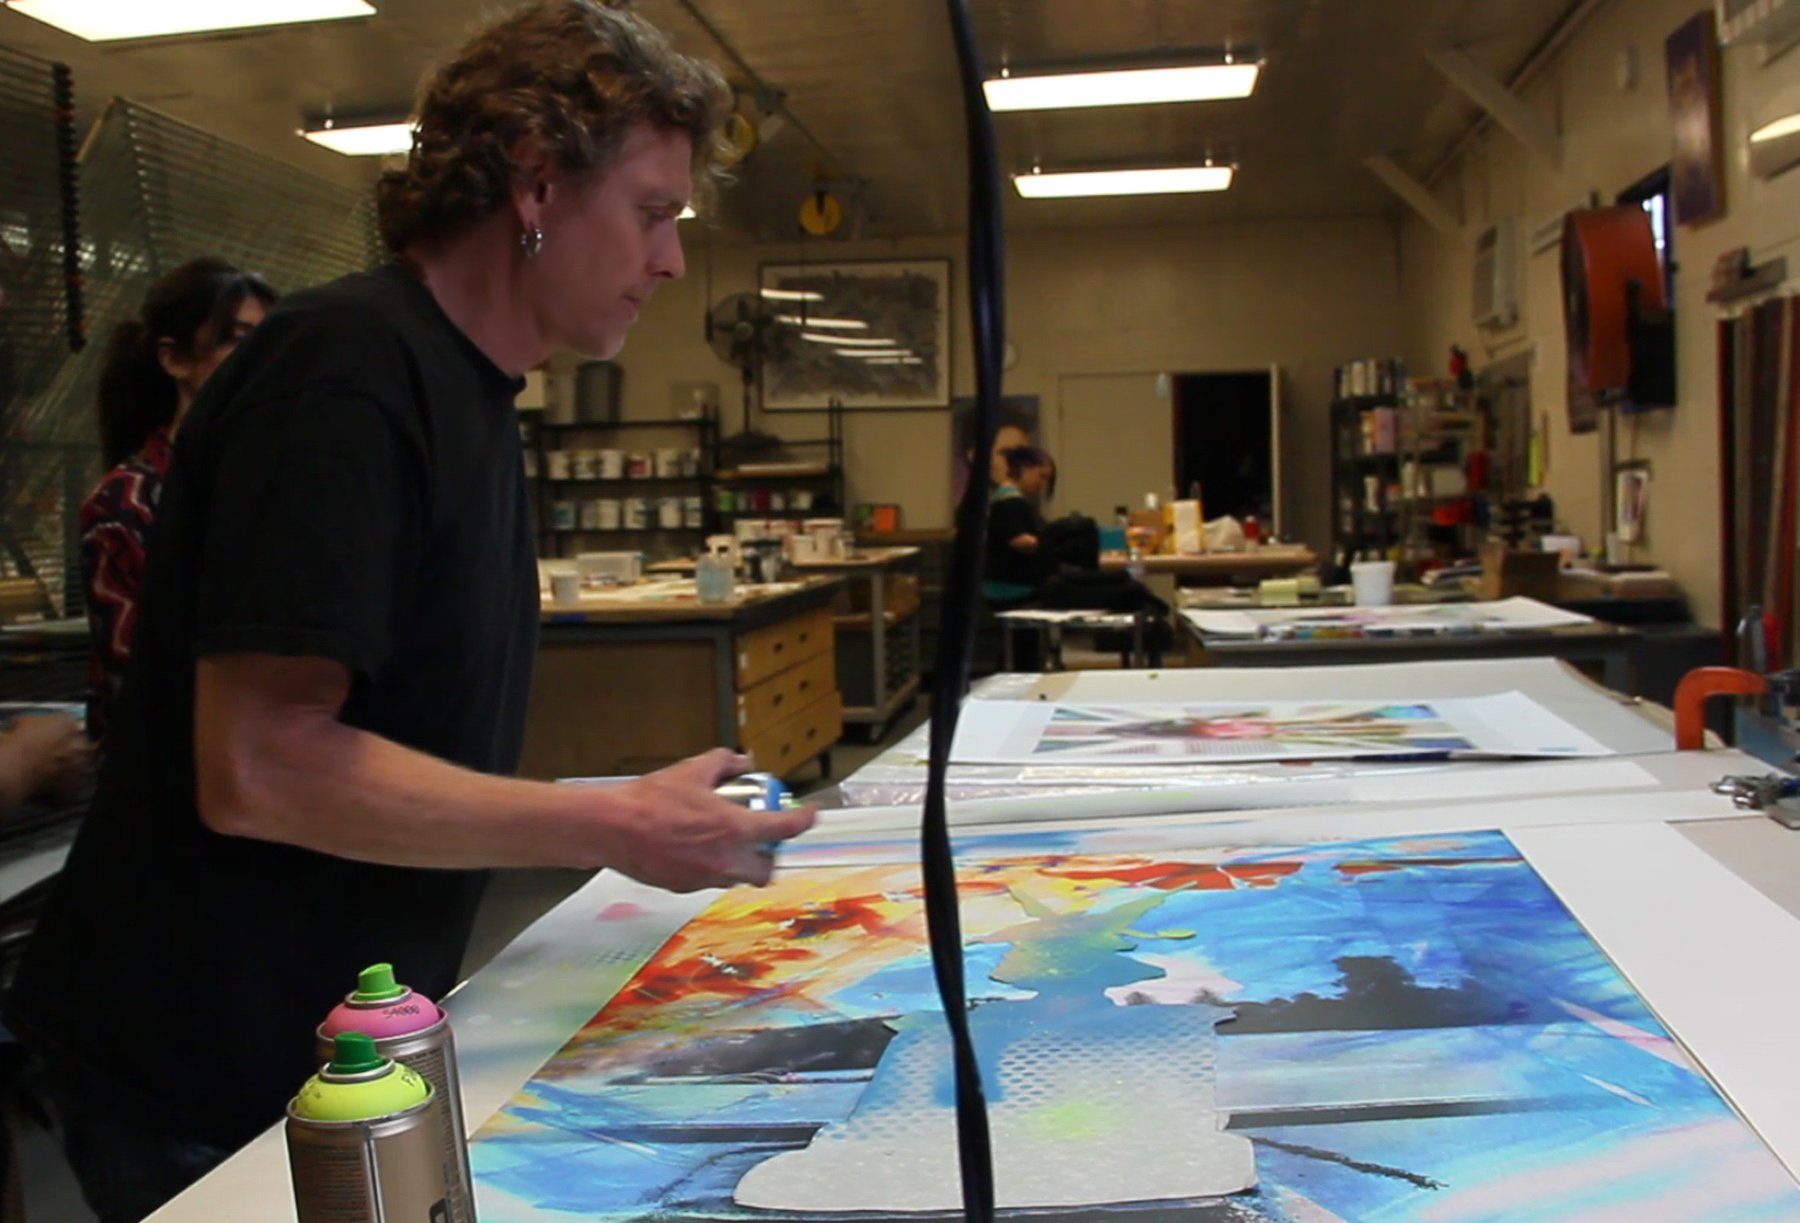 Def Leppard artist Rick Allen will be showcasing his original art work at Wentworth Gallery's McLean, Va., and Bethesda, Md. locations on Saturday, Feb. 18, 2017. (Courtesy Allison Zucker-Perelman/Relevant Communications)